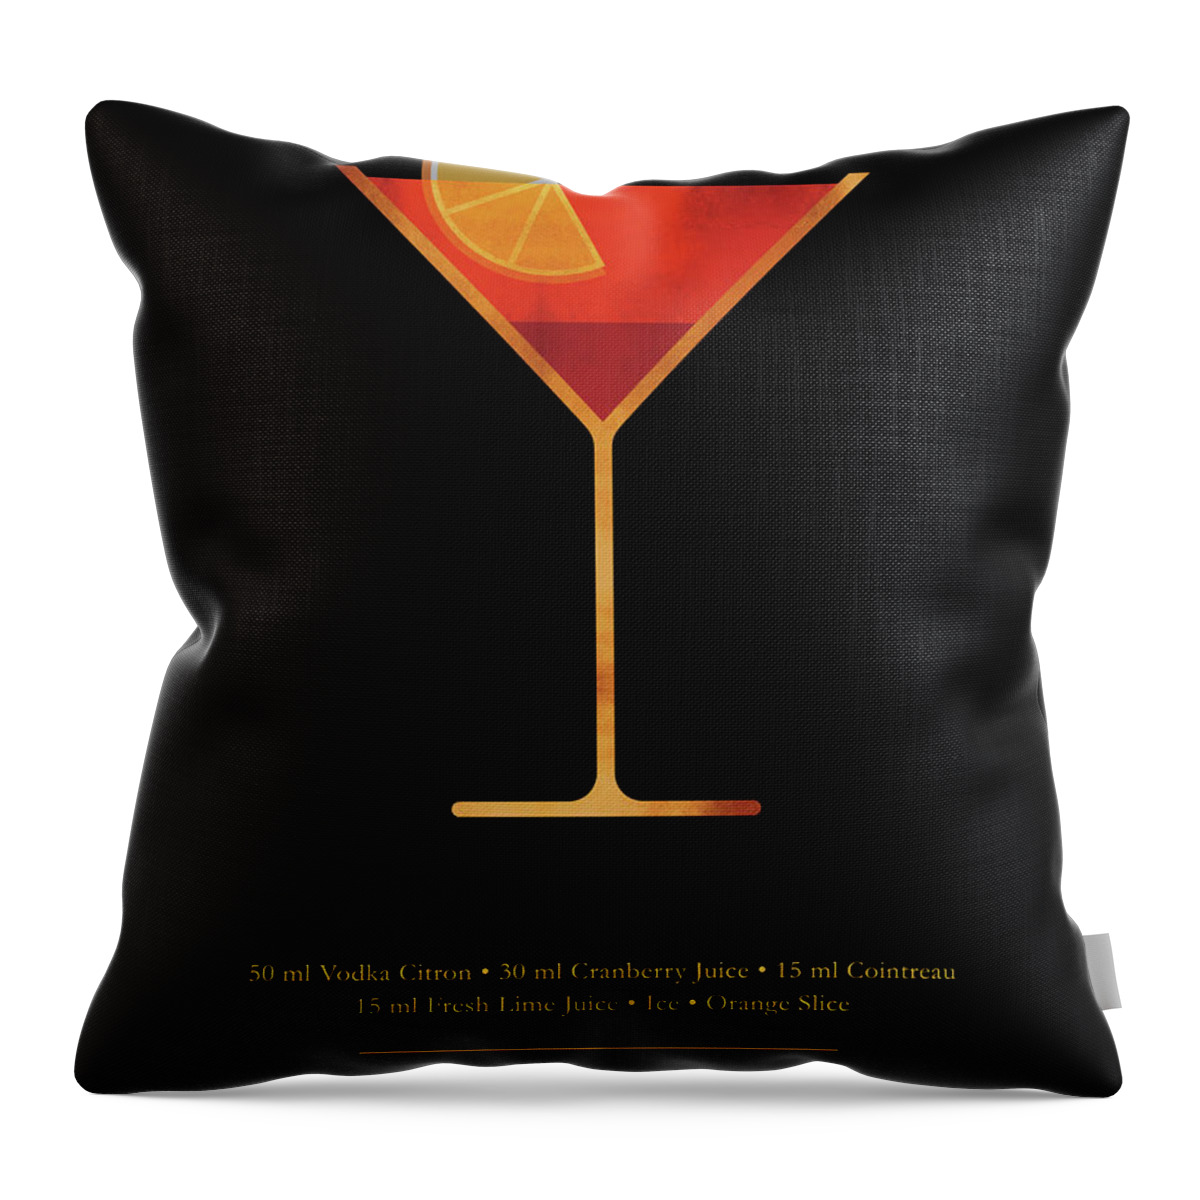 Cosmopolitan Throw Pillow featuring the digital art Cosmopolitan Cocktail - Classic Cocktail Print - Black and Gold - Modern, Minimal Lounge Art by Studio Grafiikka